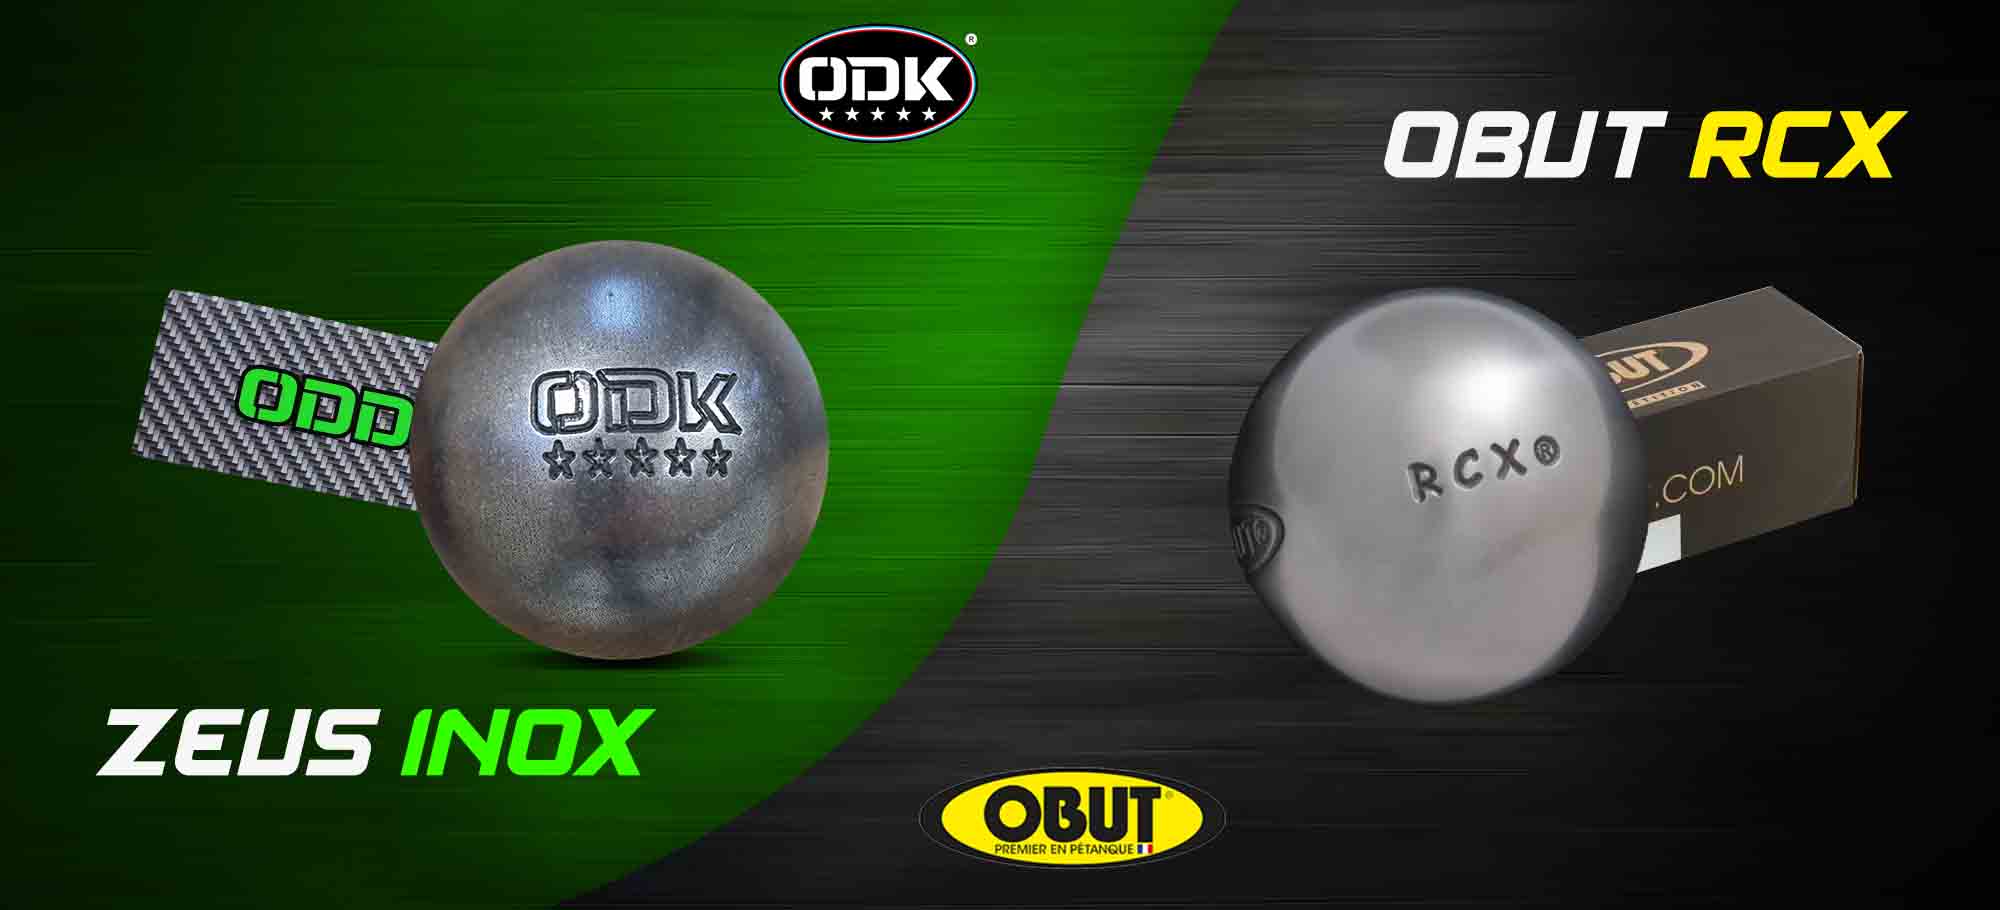 You are currently viewing Le duel de boules Oddeka Zeus inox et Obut RCX